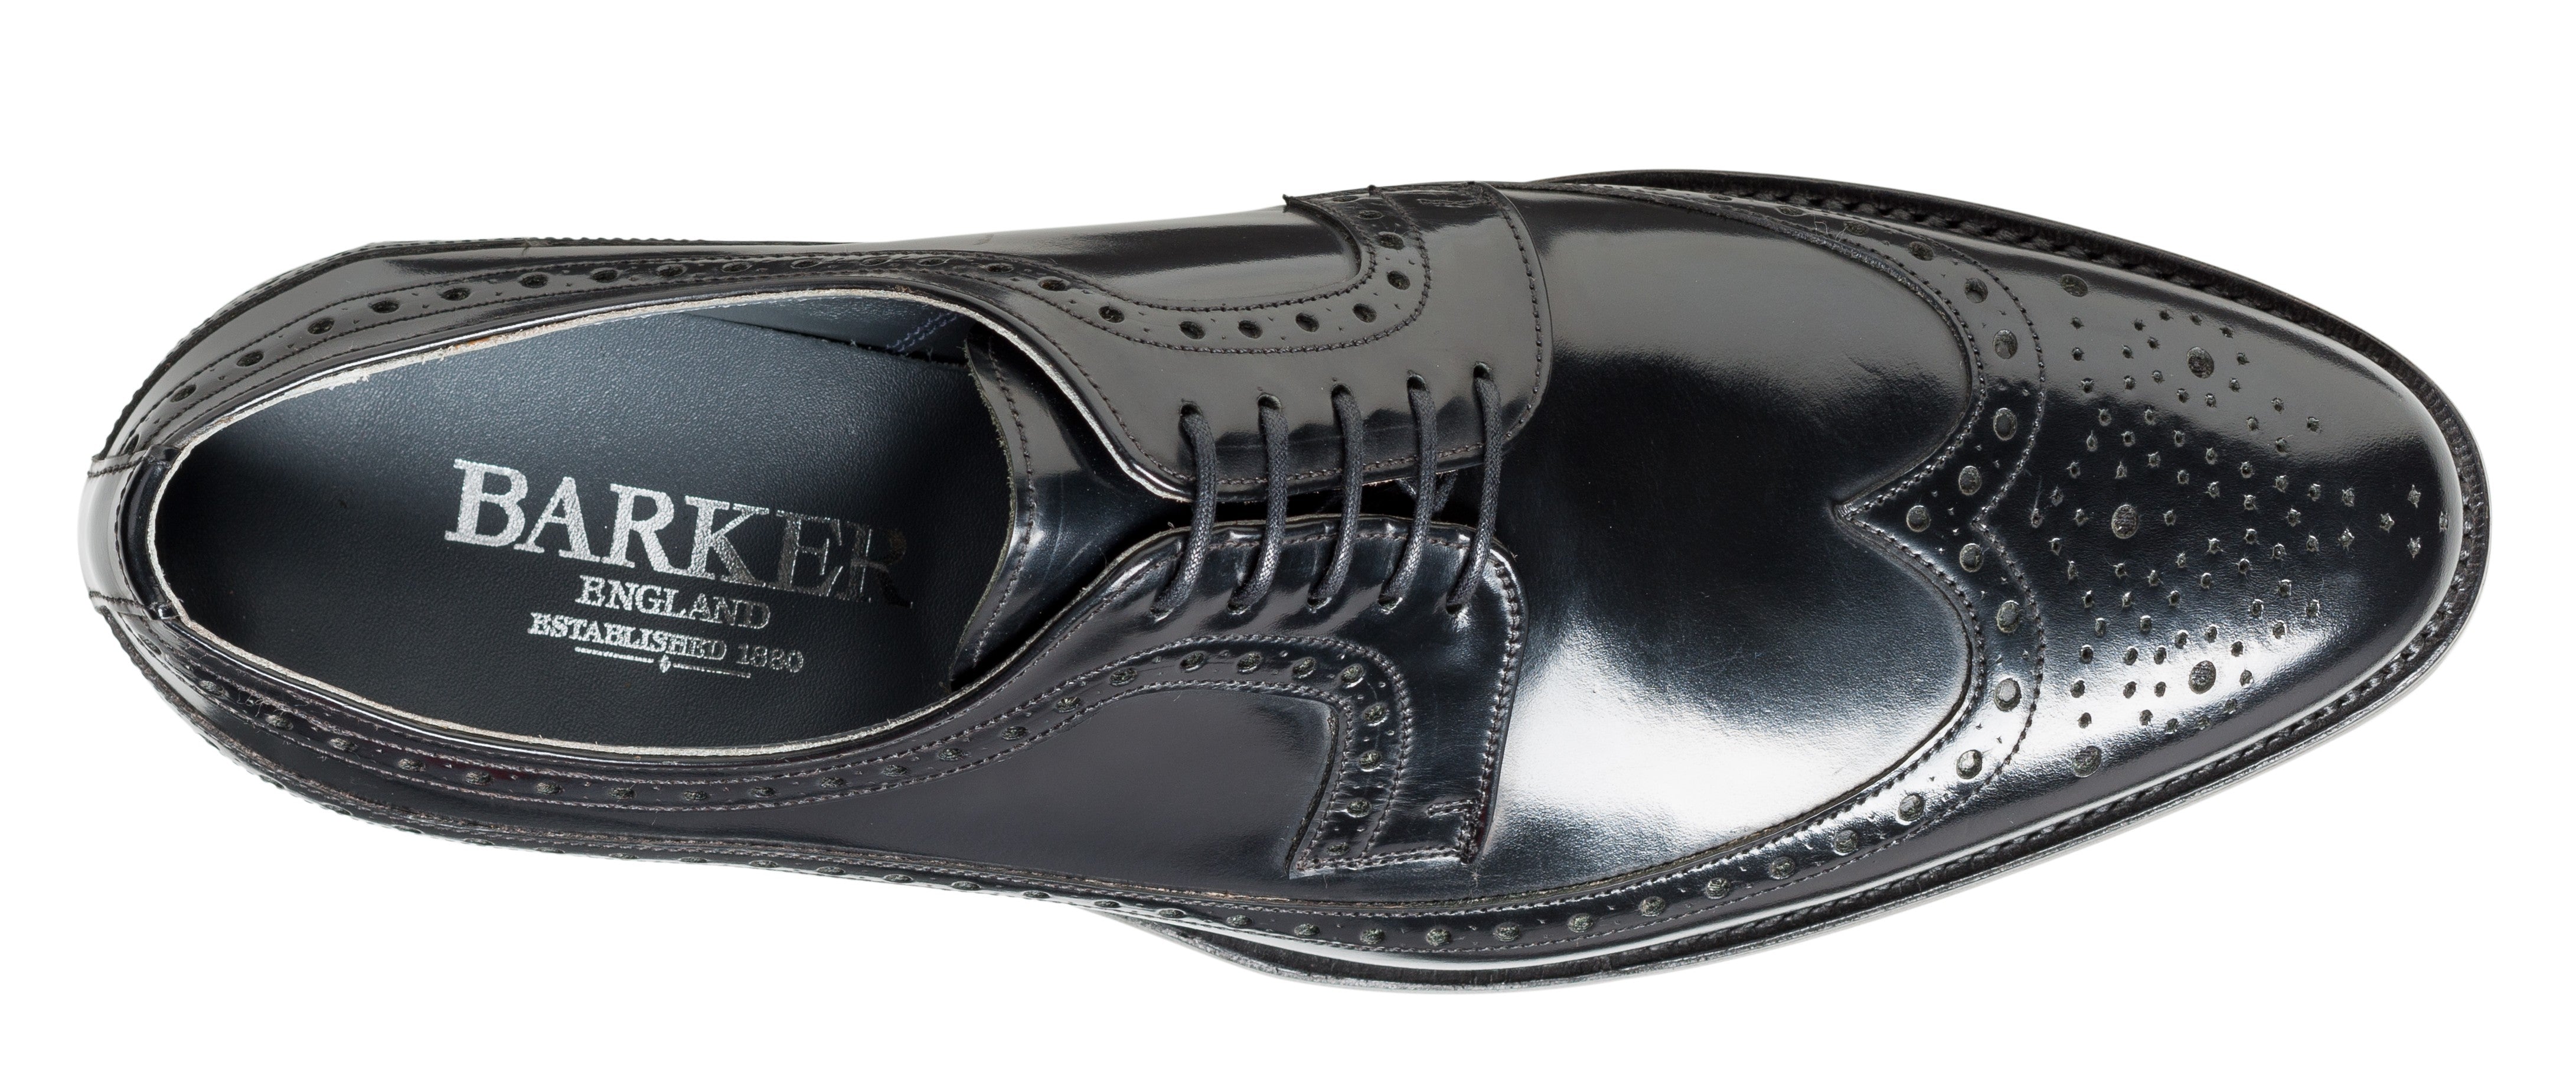 Barker Black Polish Brogue Woodbridge Shoes